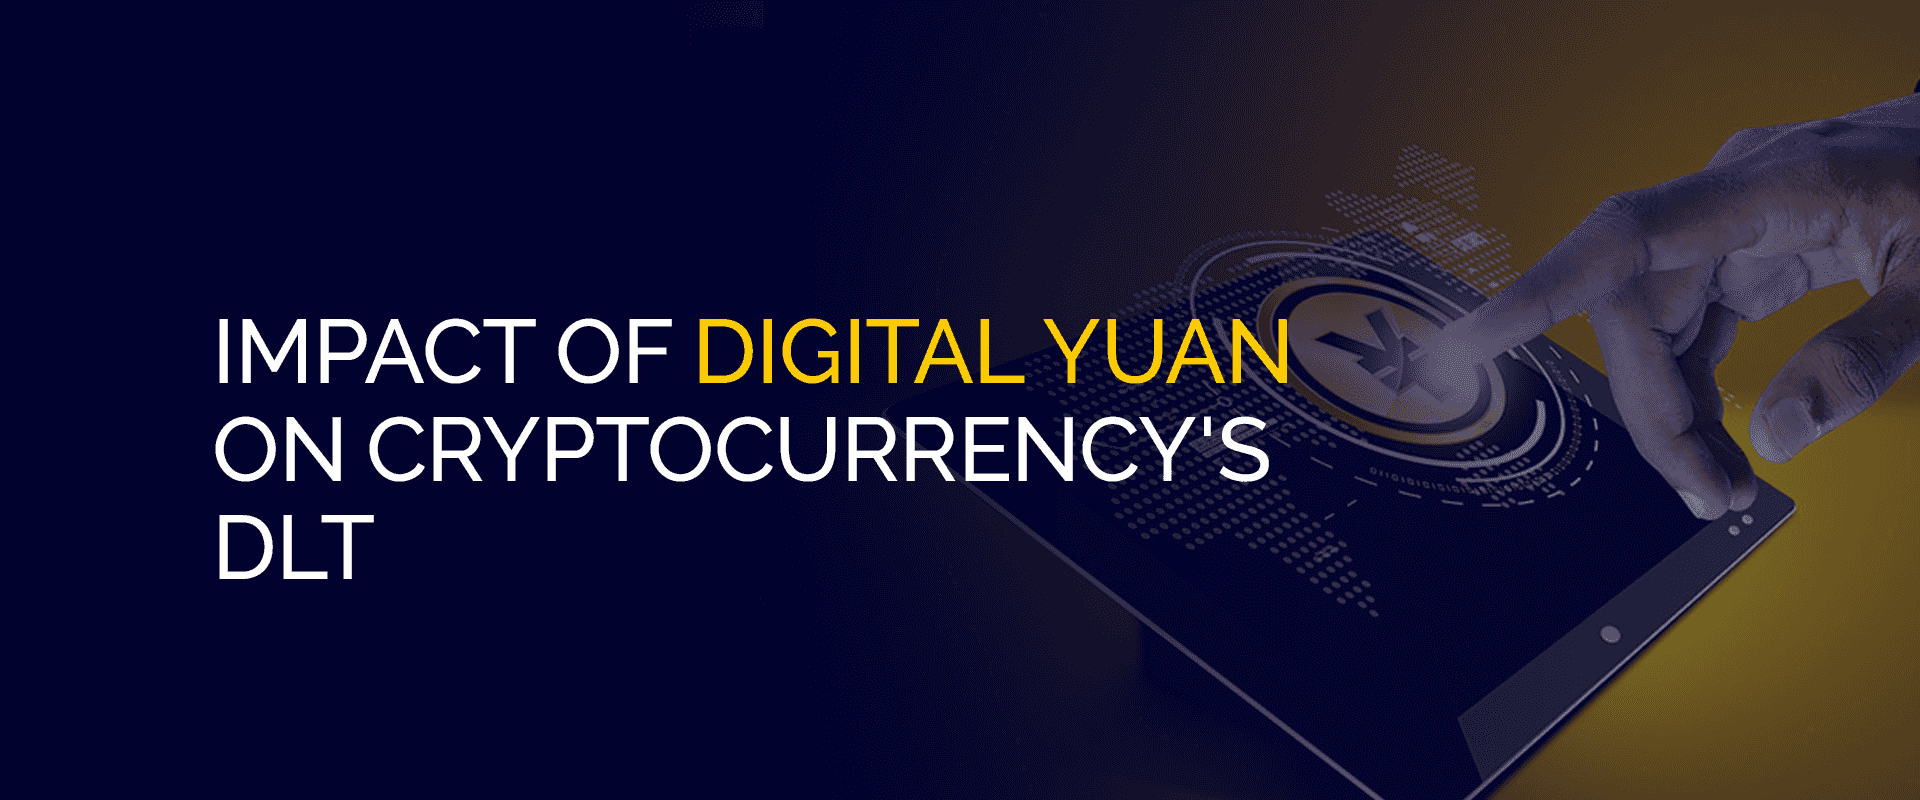 Impakt vum Digital Yuan op Cryptocurrency's DLT